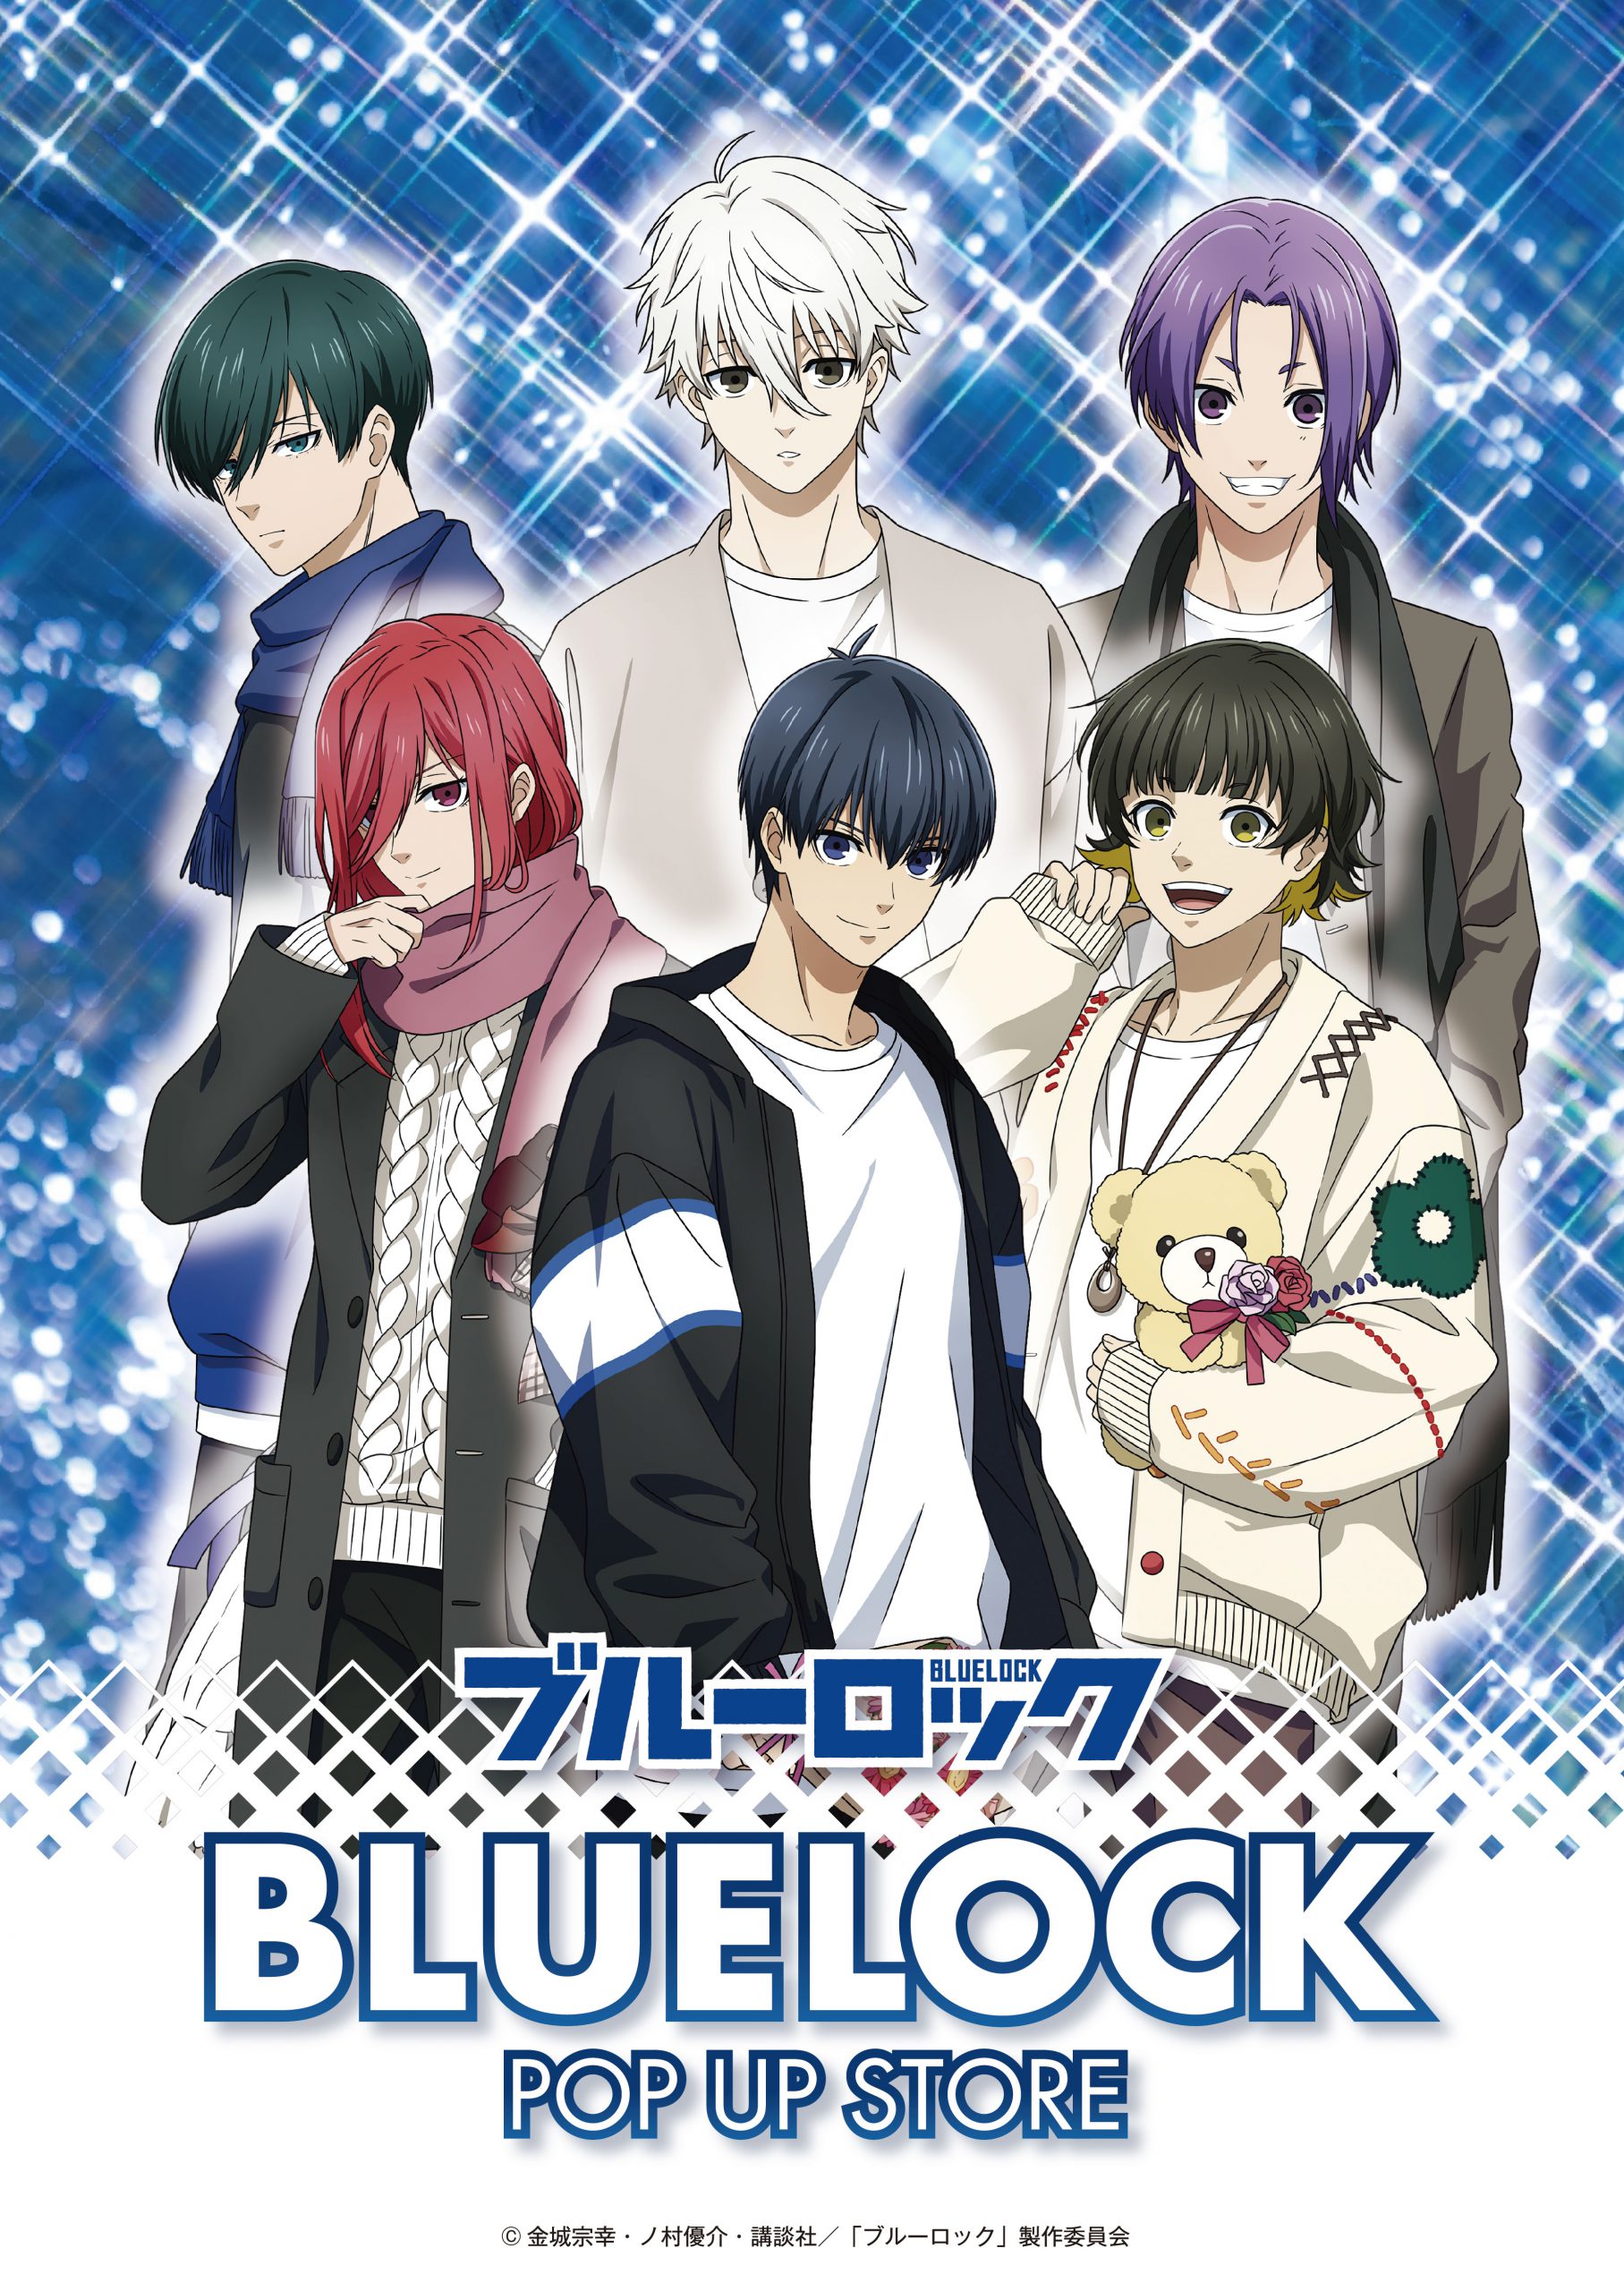 Blue Lock Review - HYPE MACHINE! - Anime Ignite